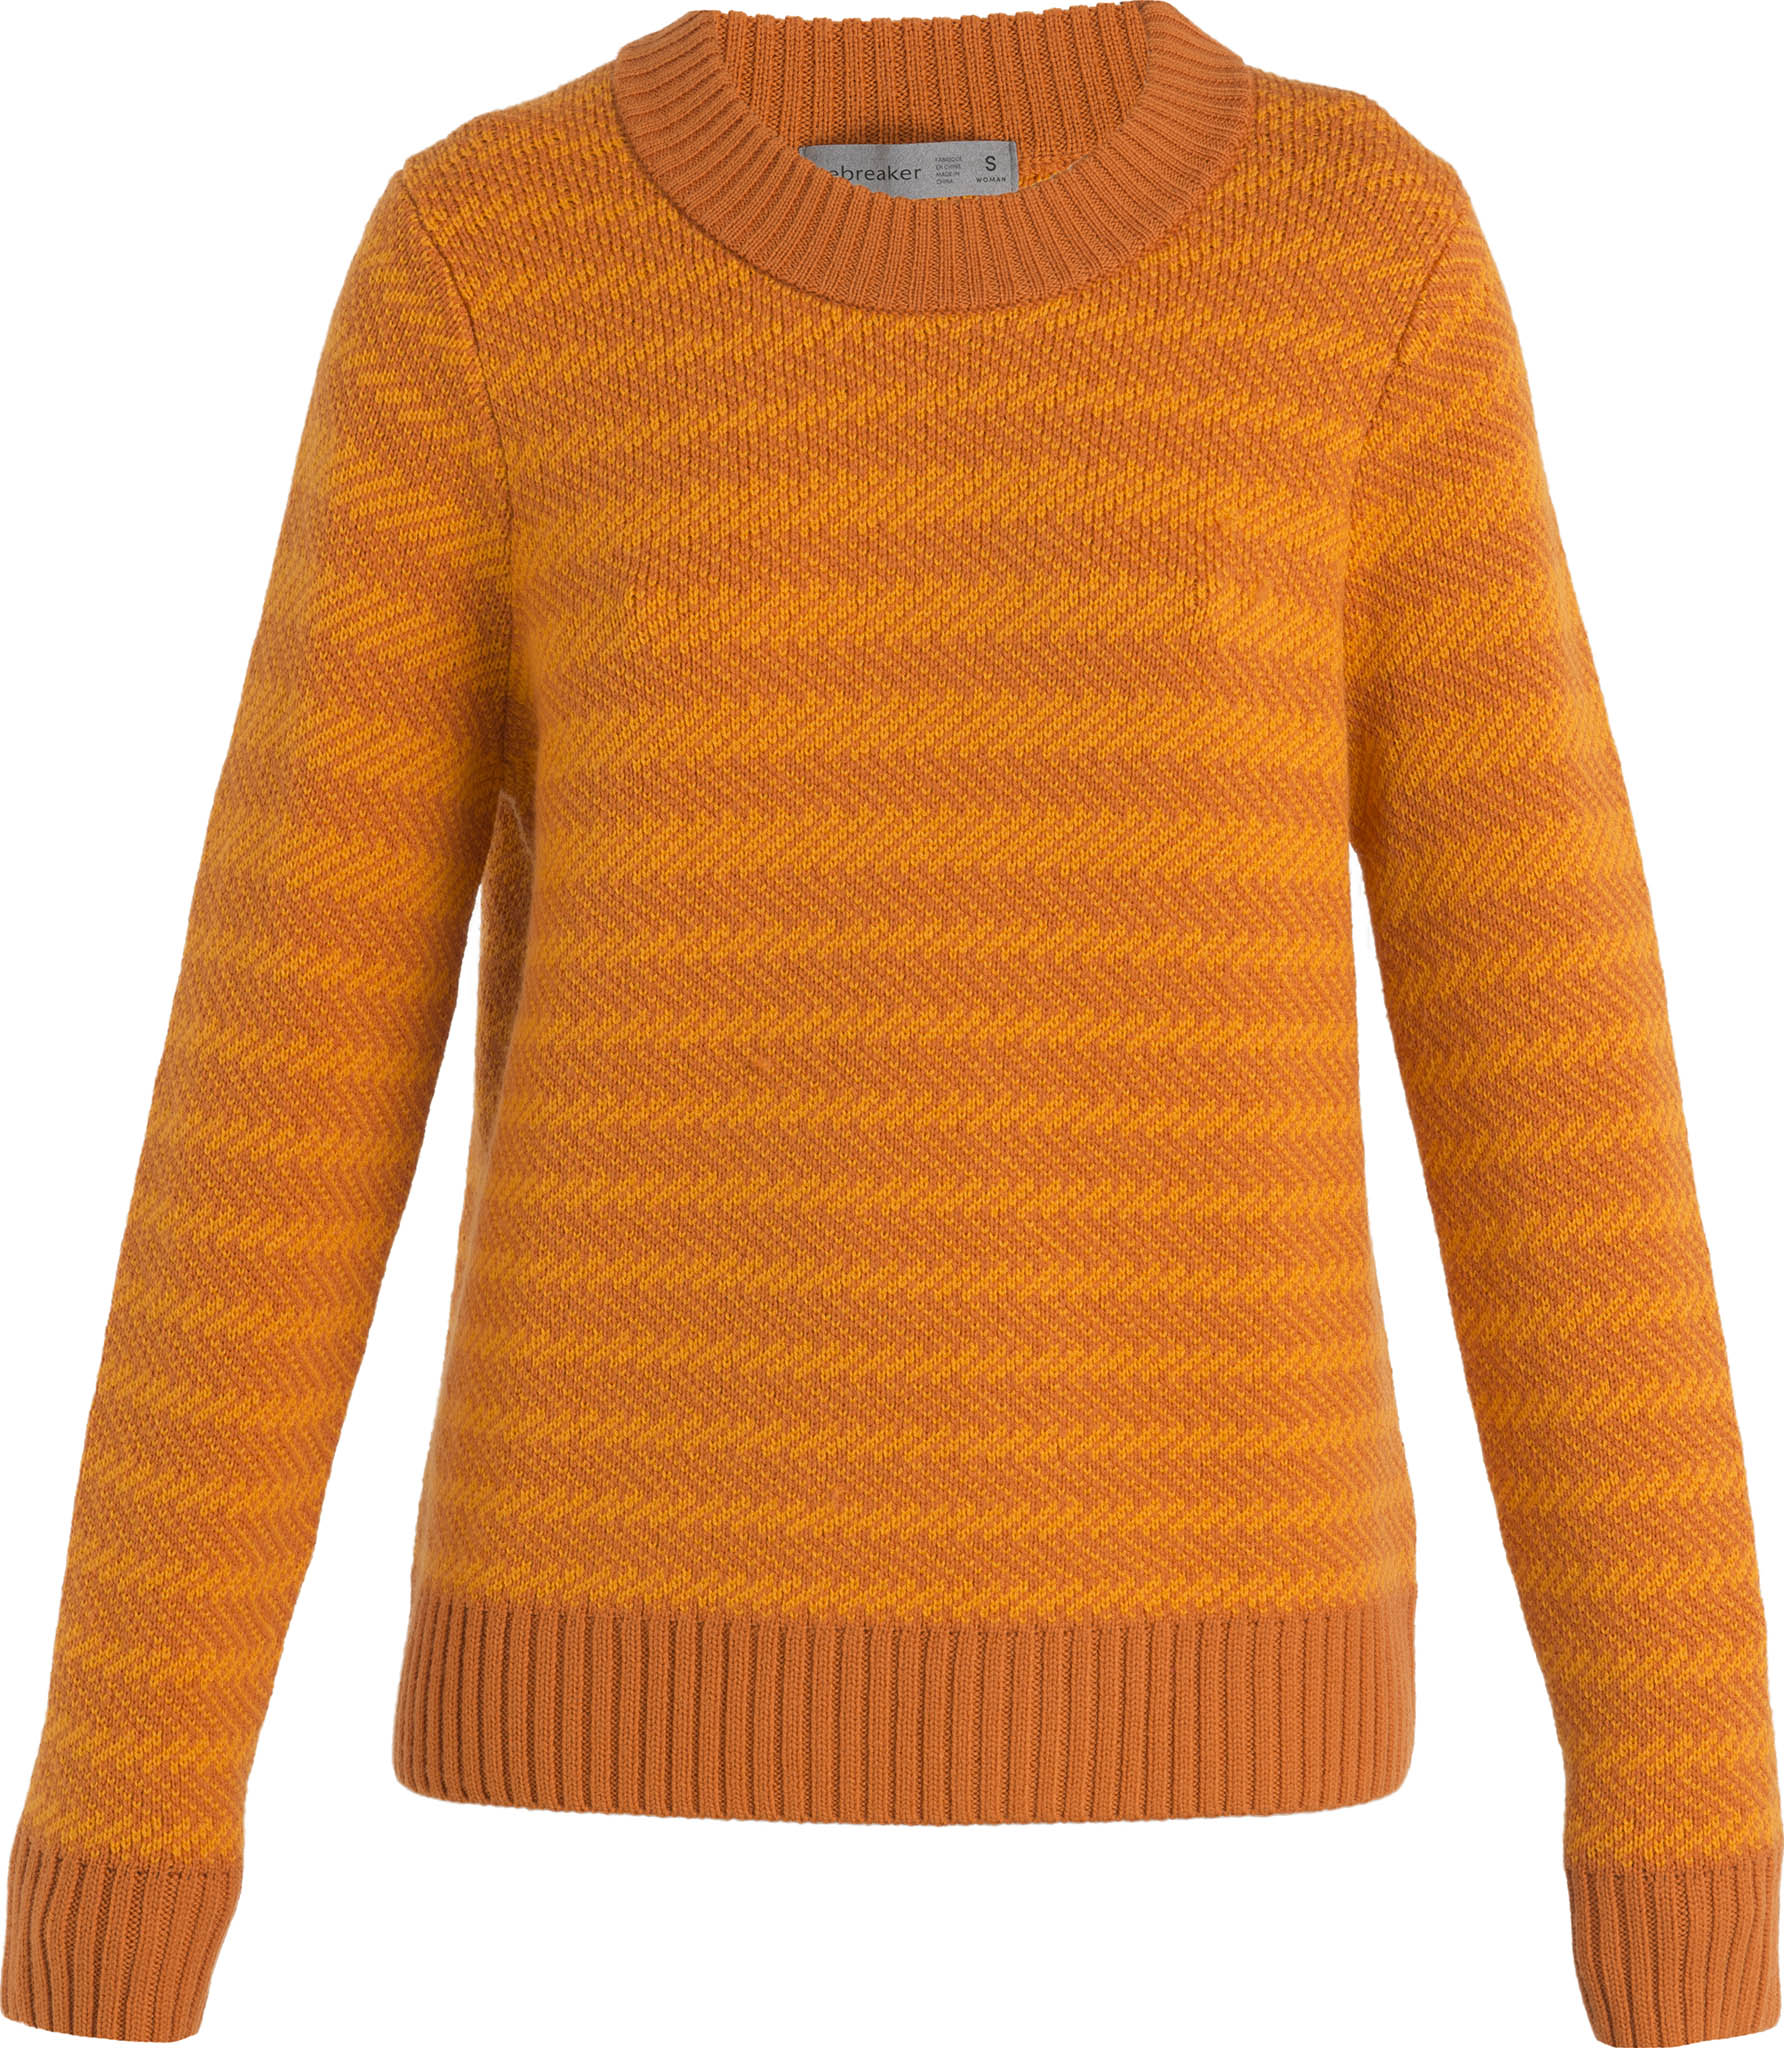 icebreaker Merino Waypoint Crewe Sweater - Women's